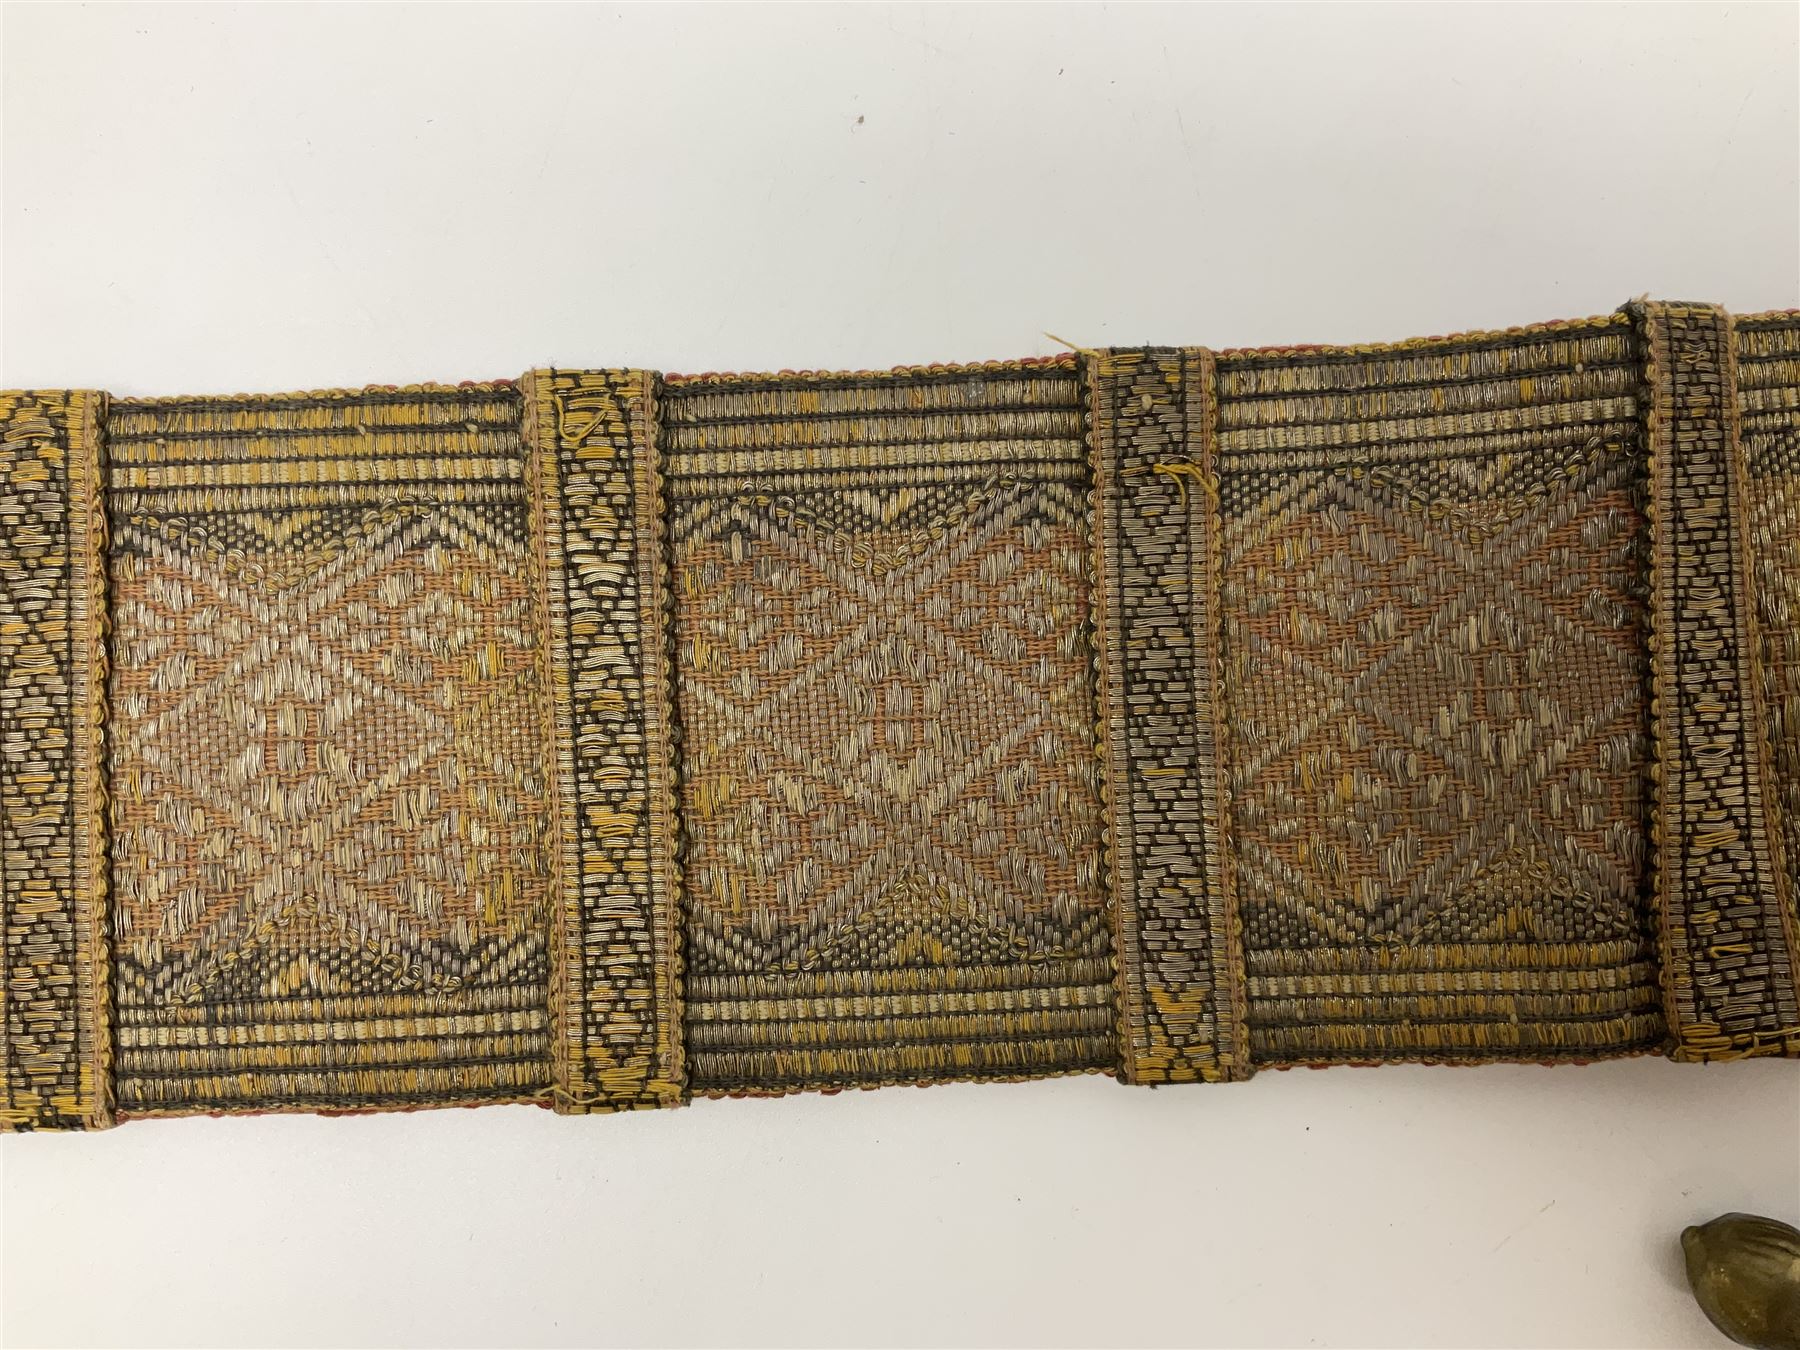 Late 19th century Yemeni Tuza jambiya as worn by religious elite - Image 15 of 25